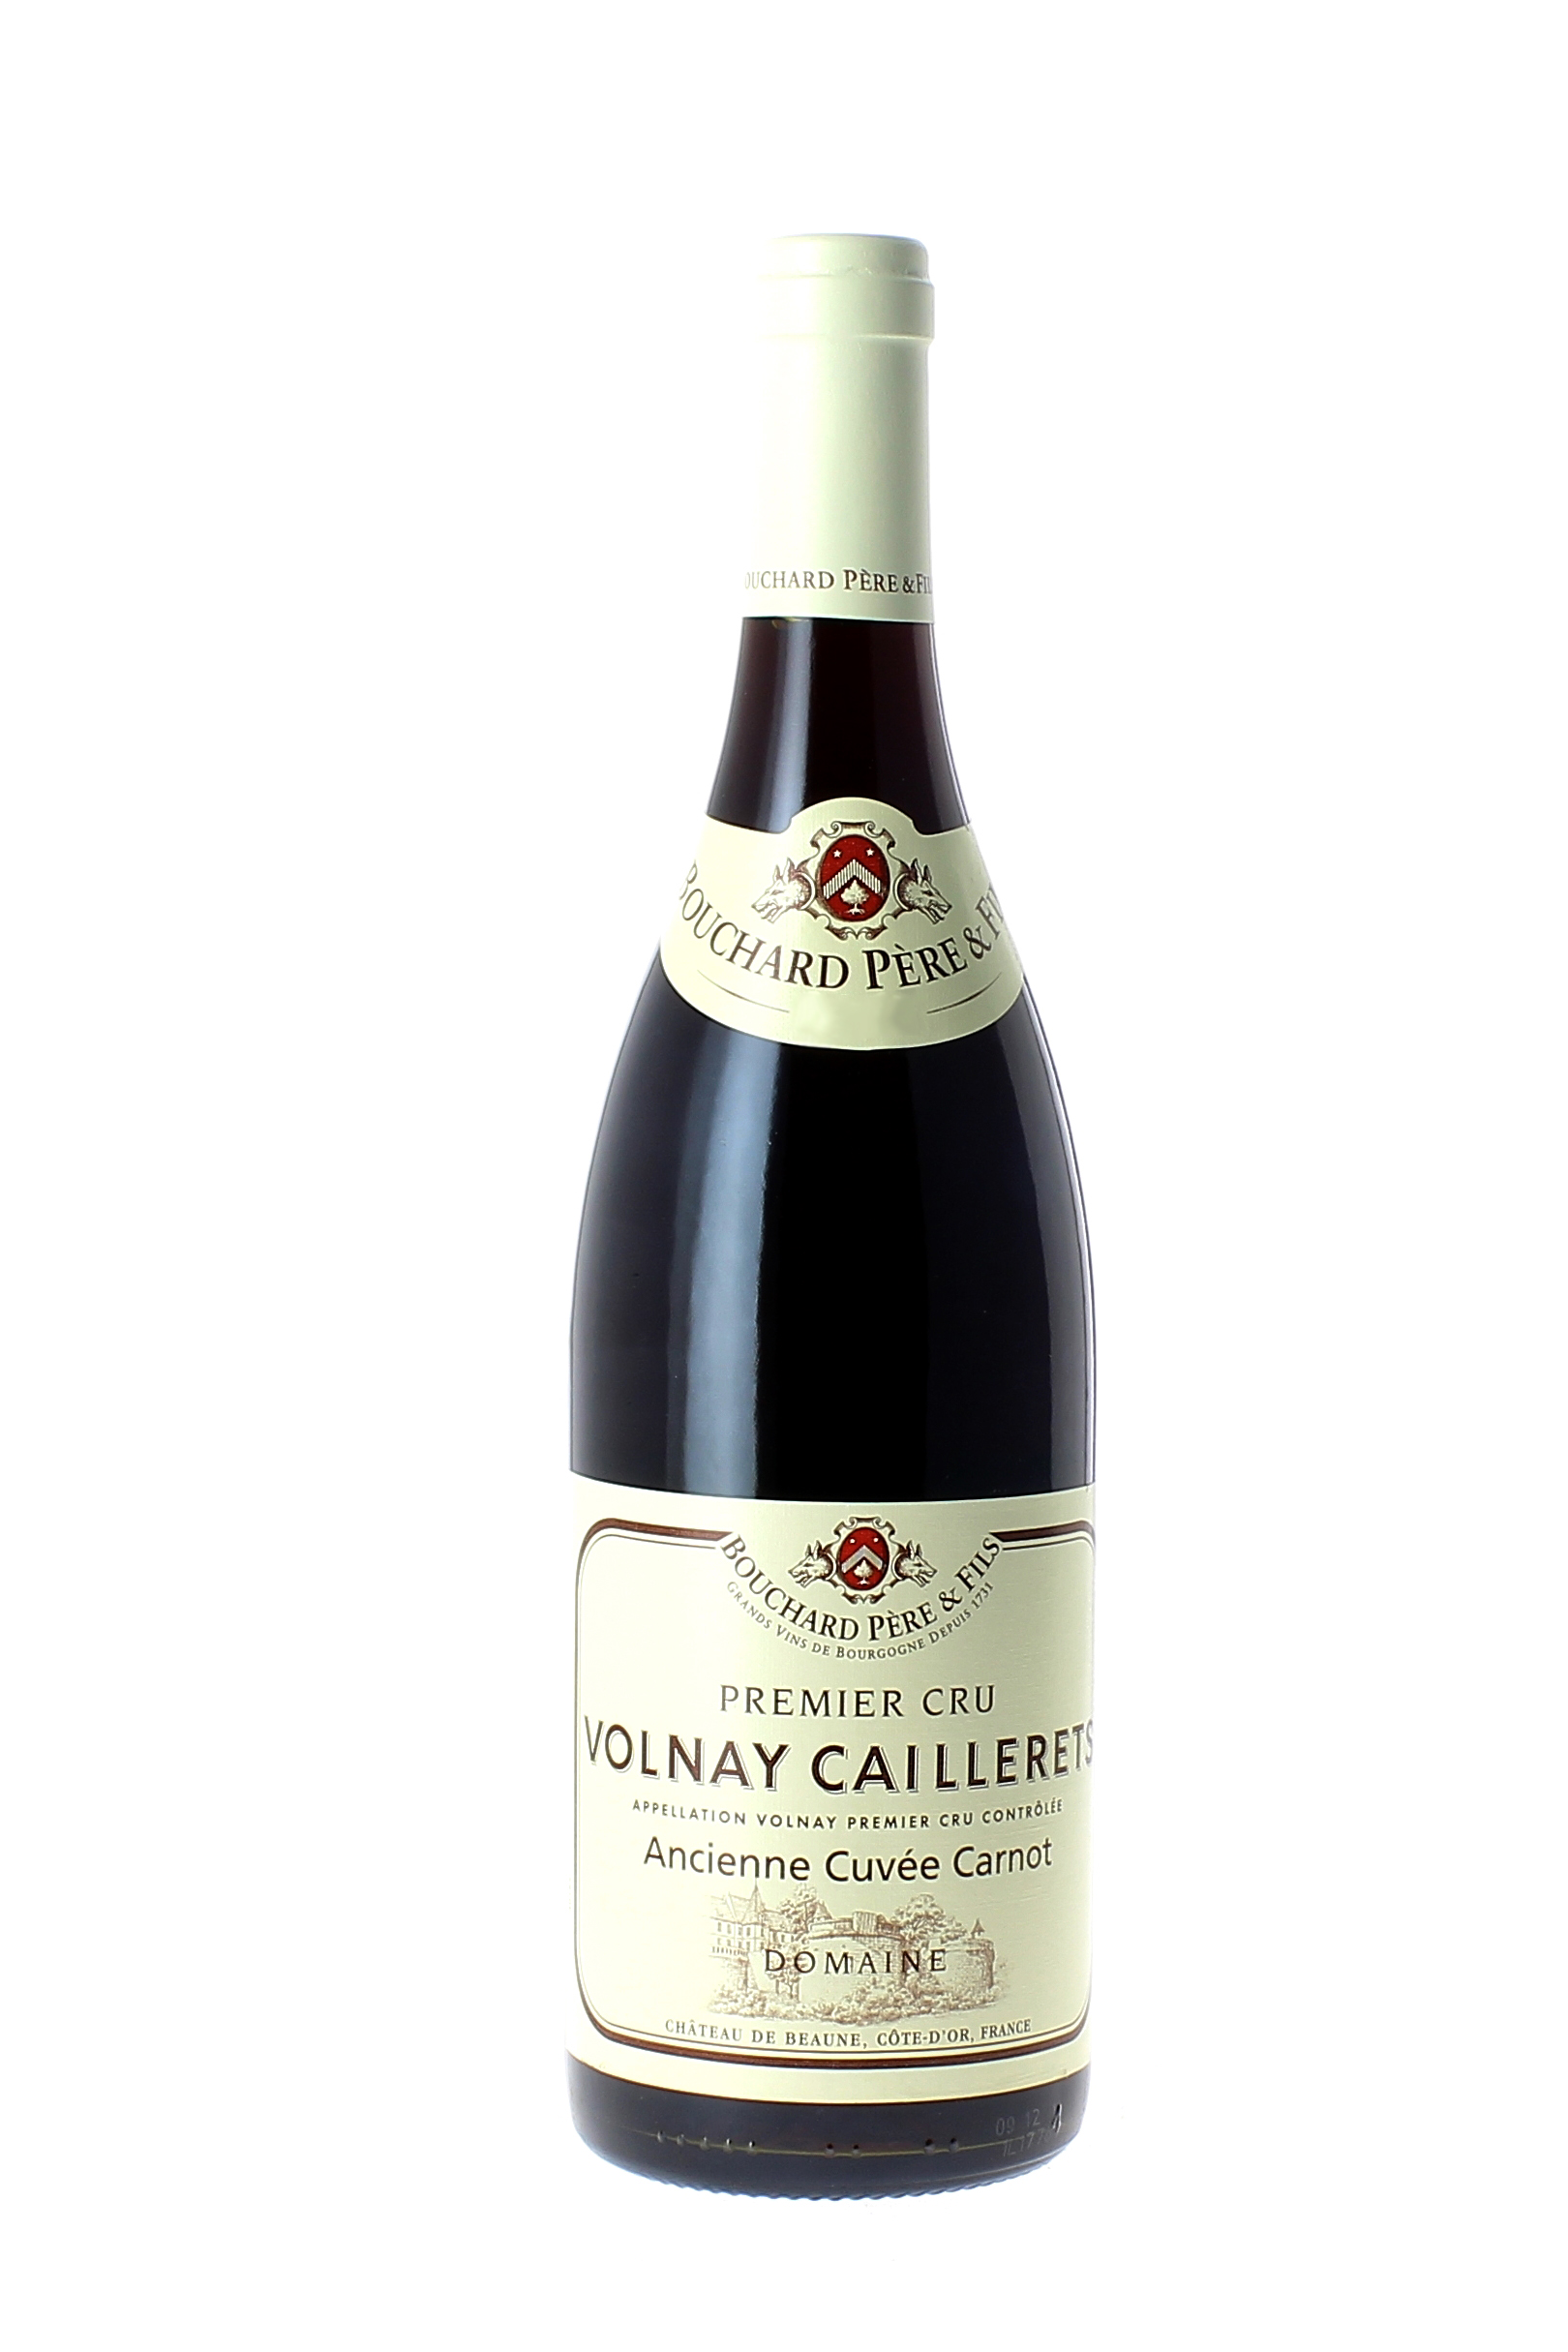 Volnay caillerets ancienne cuve carnot 1998  BOUCHARD Pre et fils, Bourgogne rouge